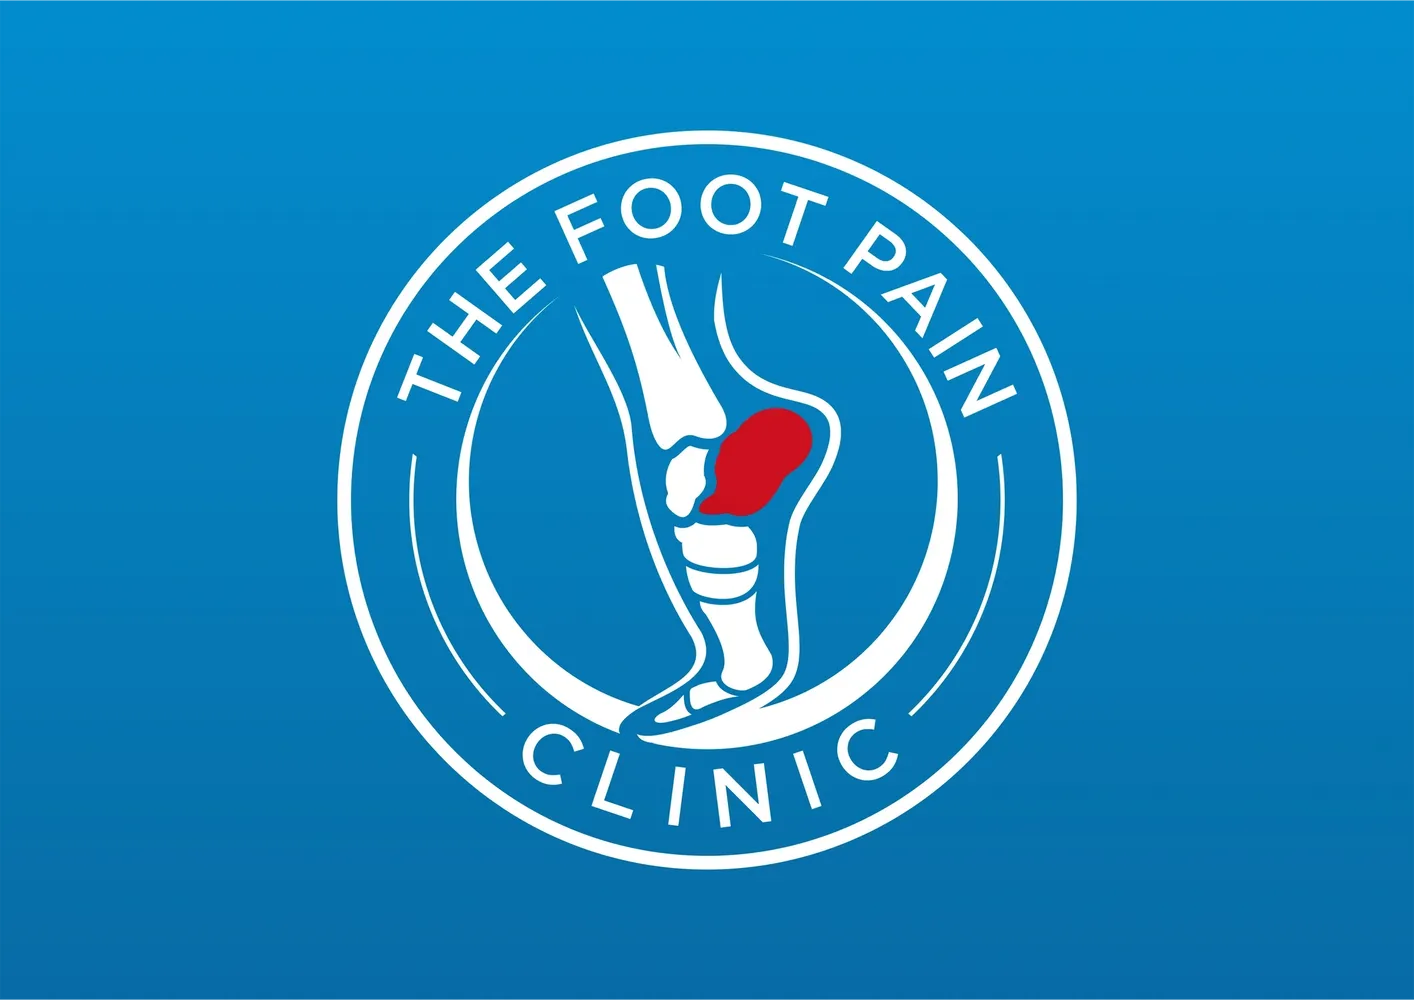 The Foot Pain Clinic logo